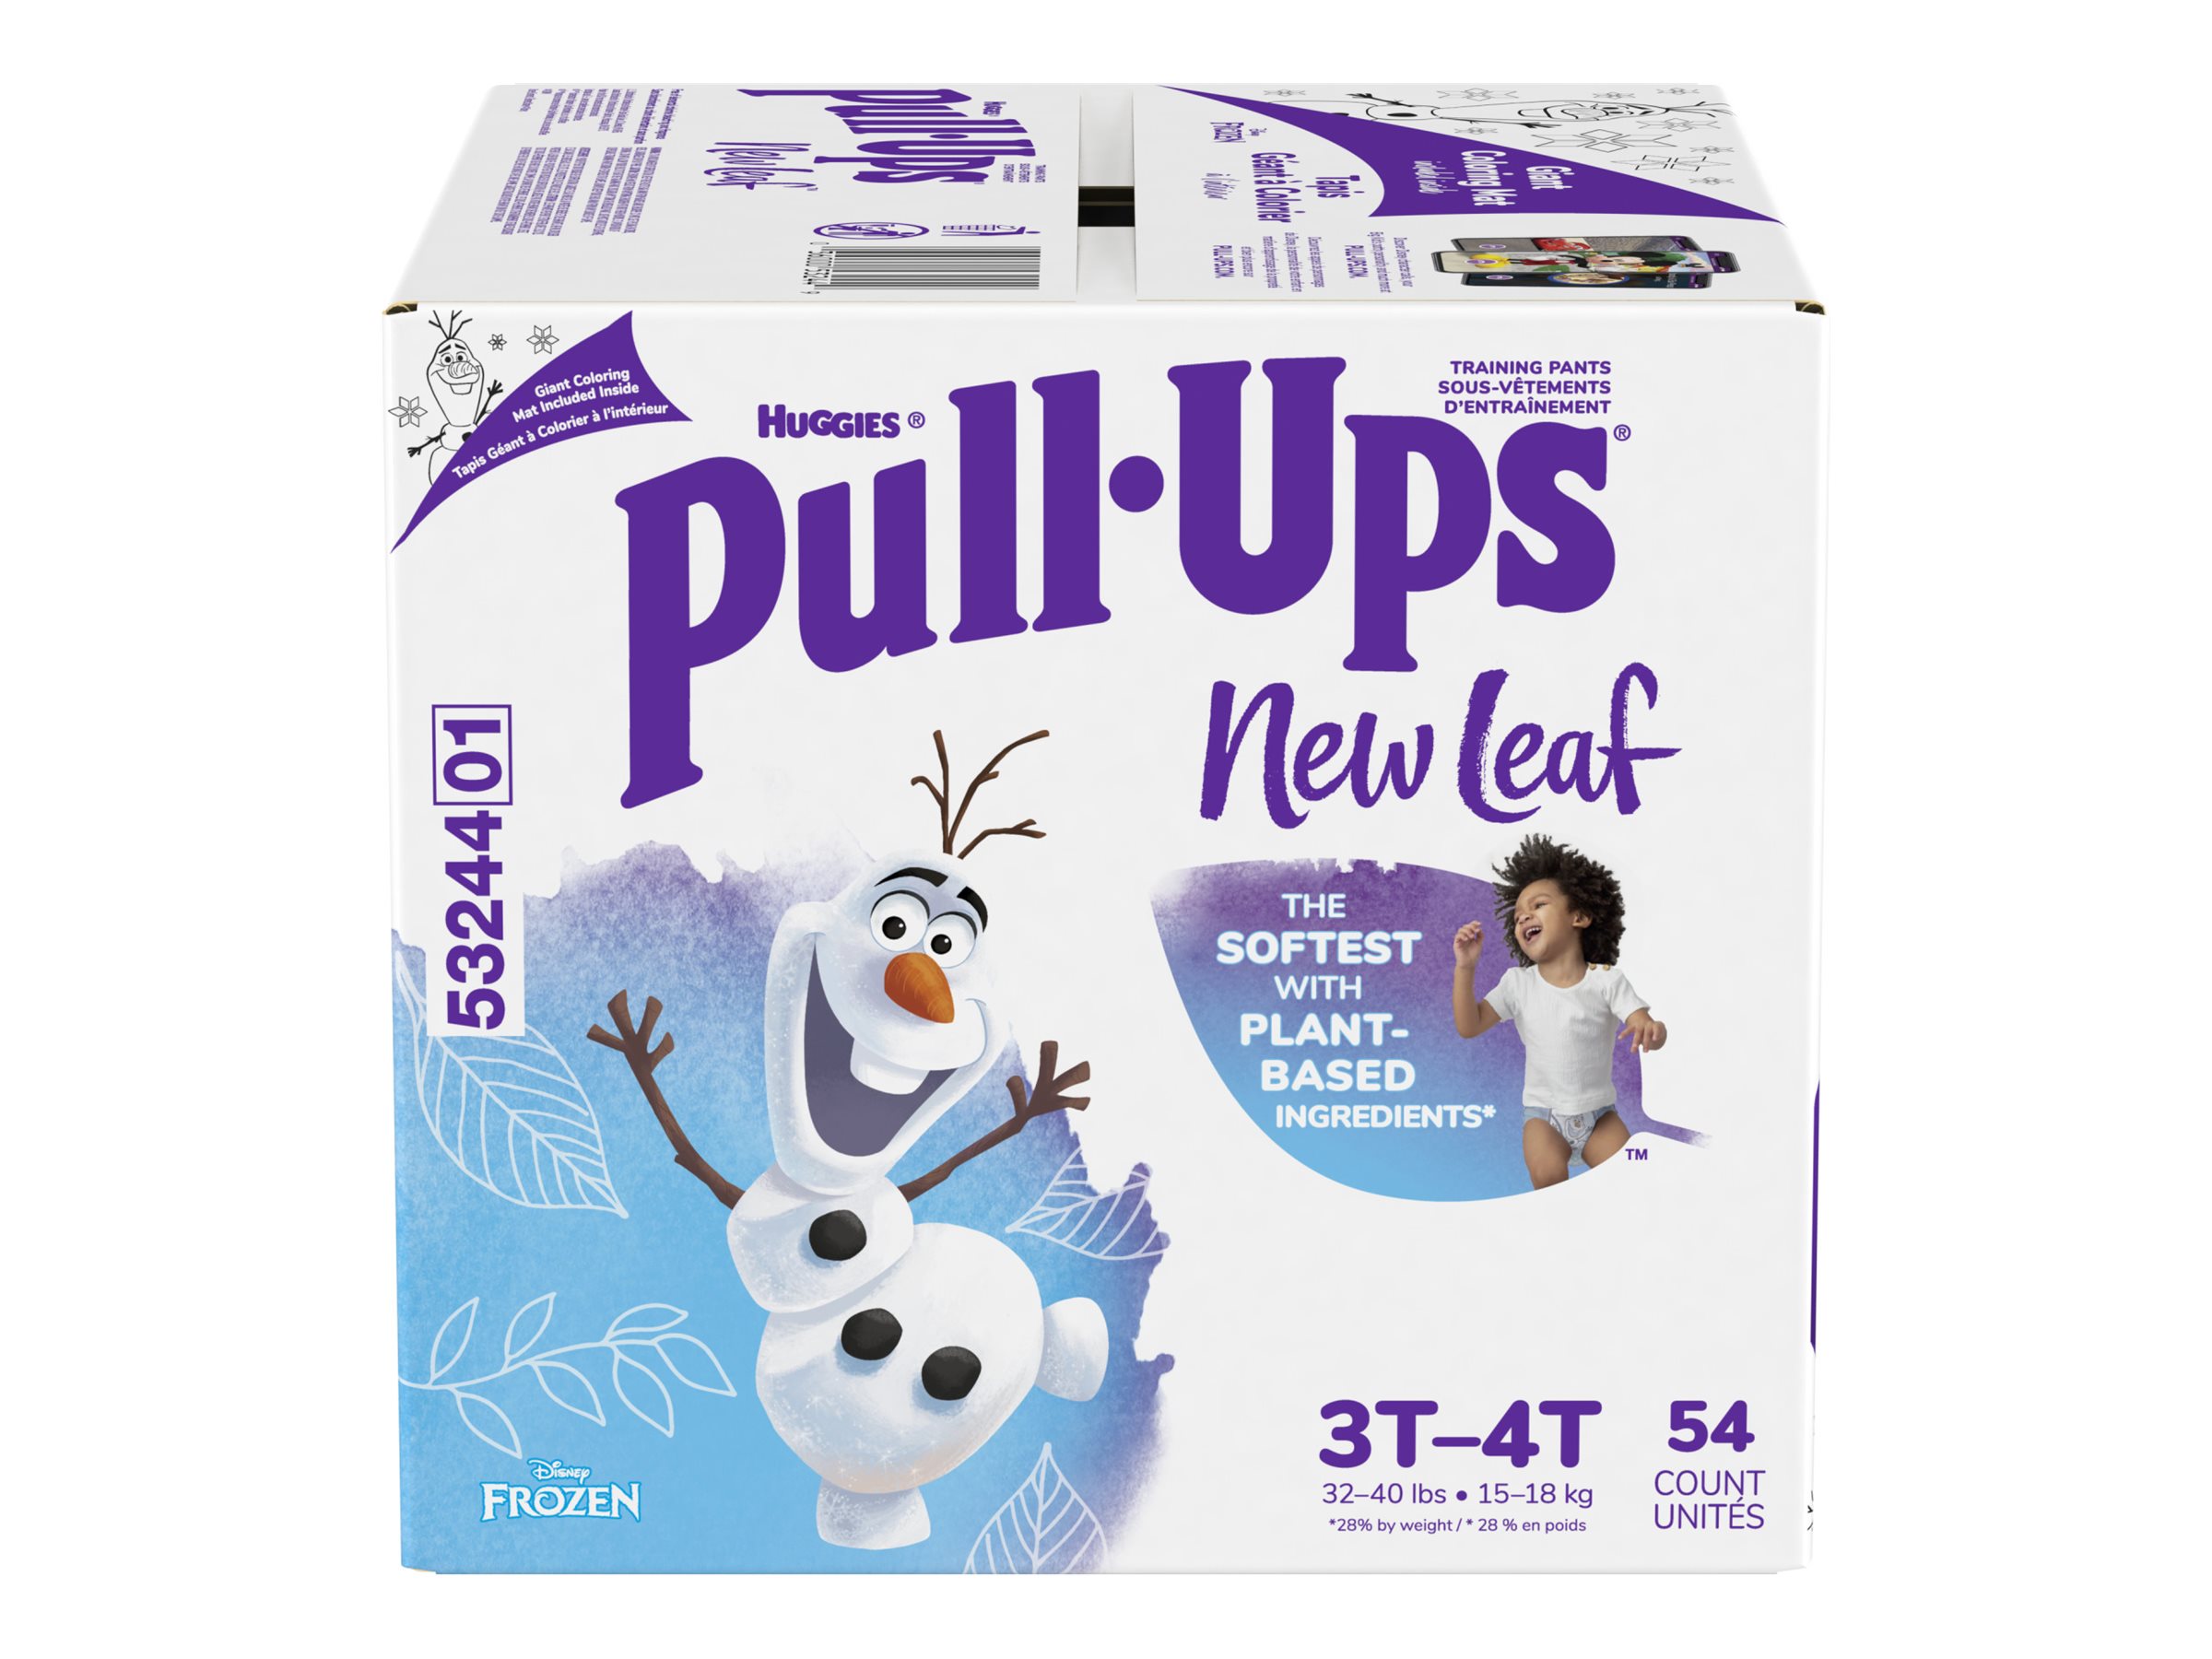  Pull-Ups New Leaf Boys' Disney Frozen Potty Training